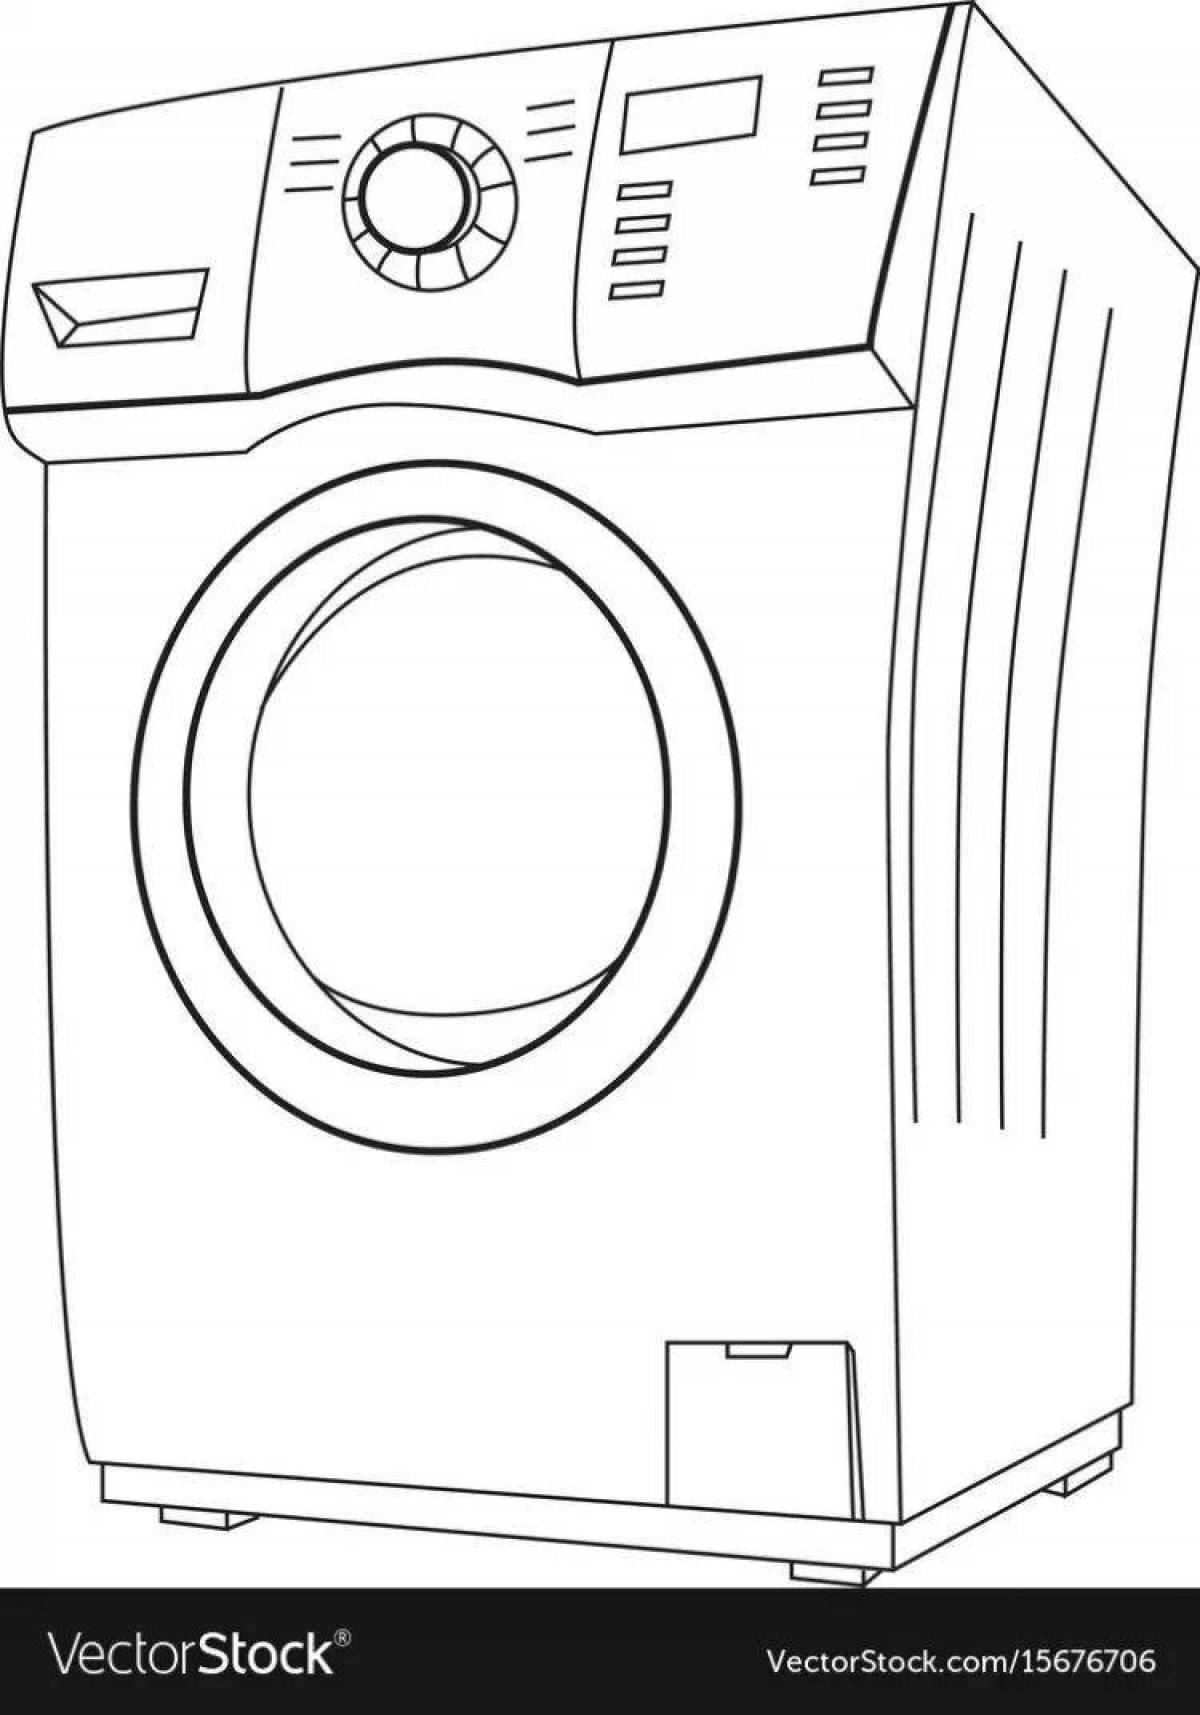 Playful washing machine coloring page